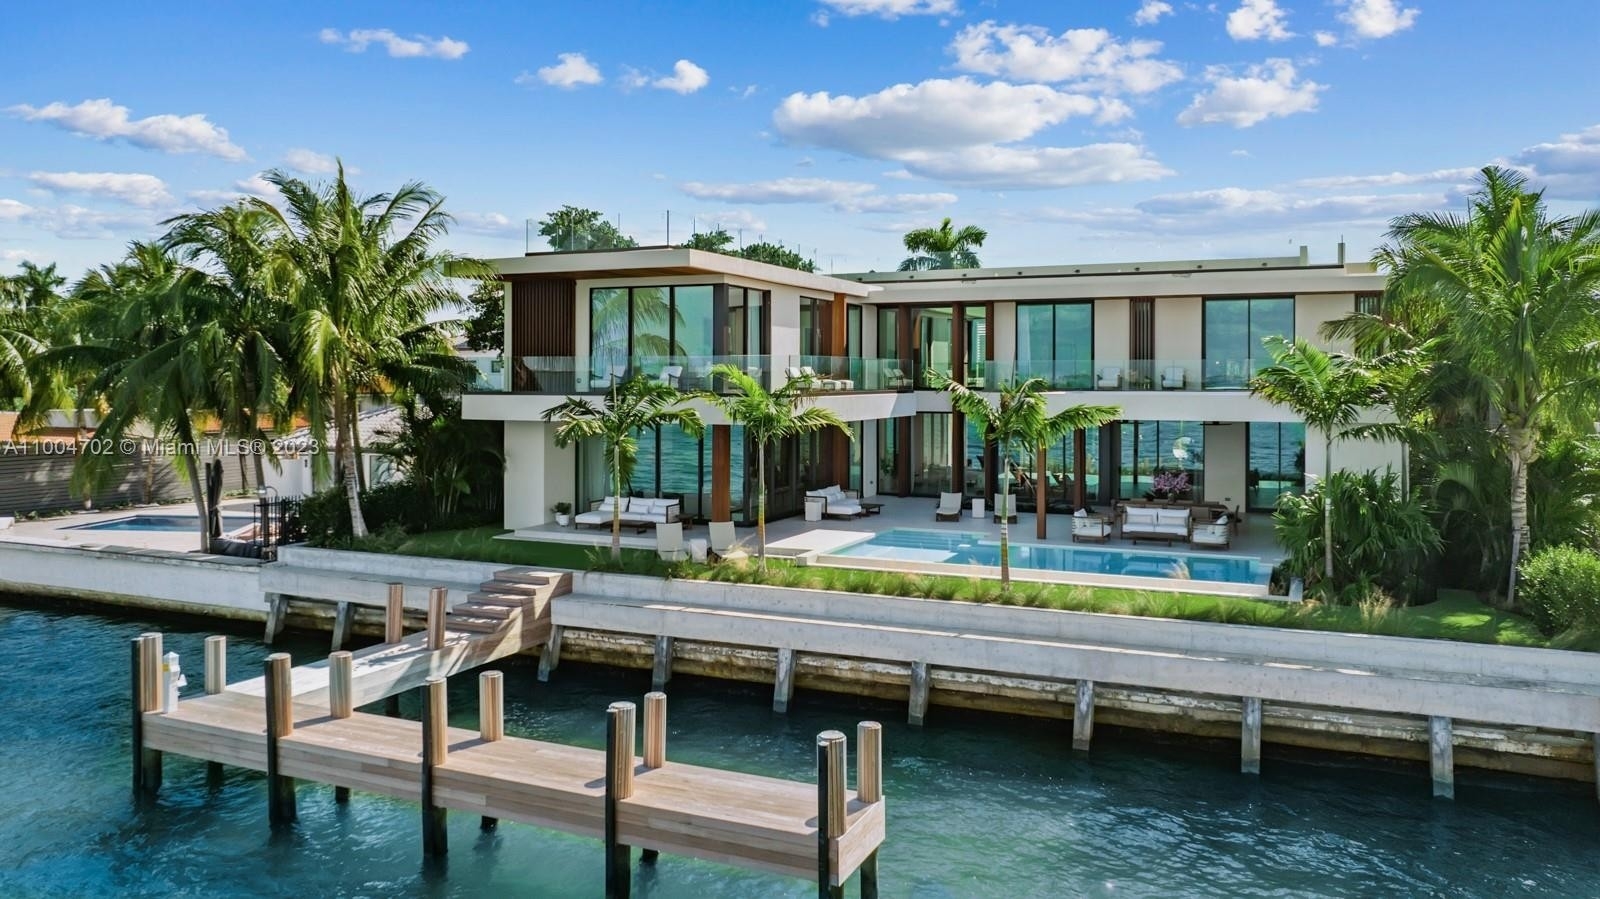 Property at Venetian Islands, Miami, Florida 33139